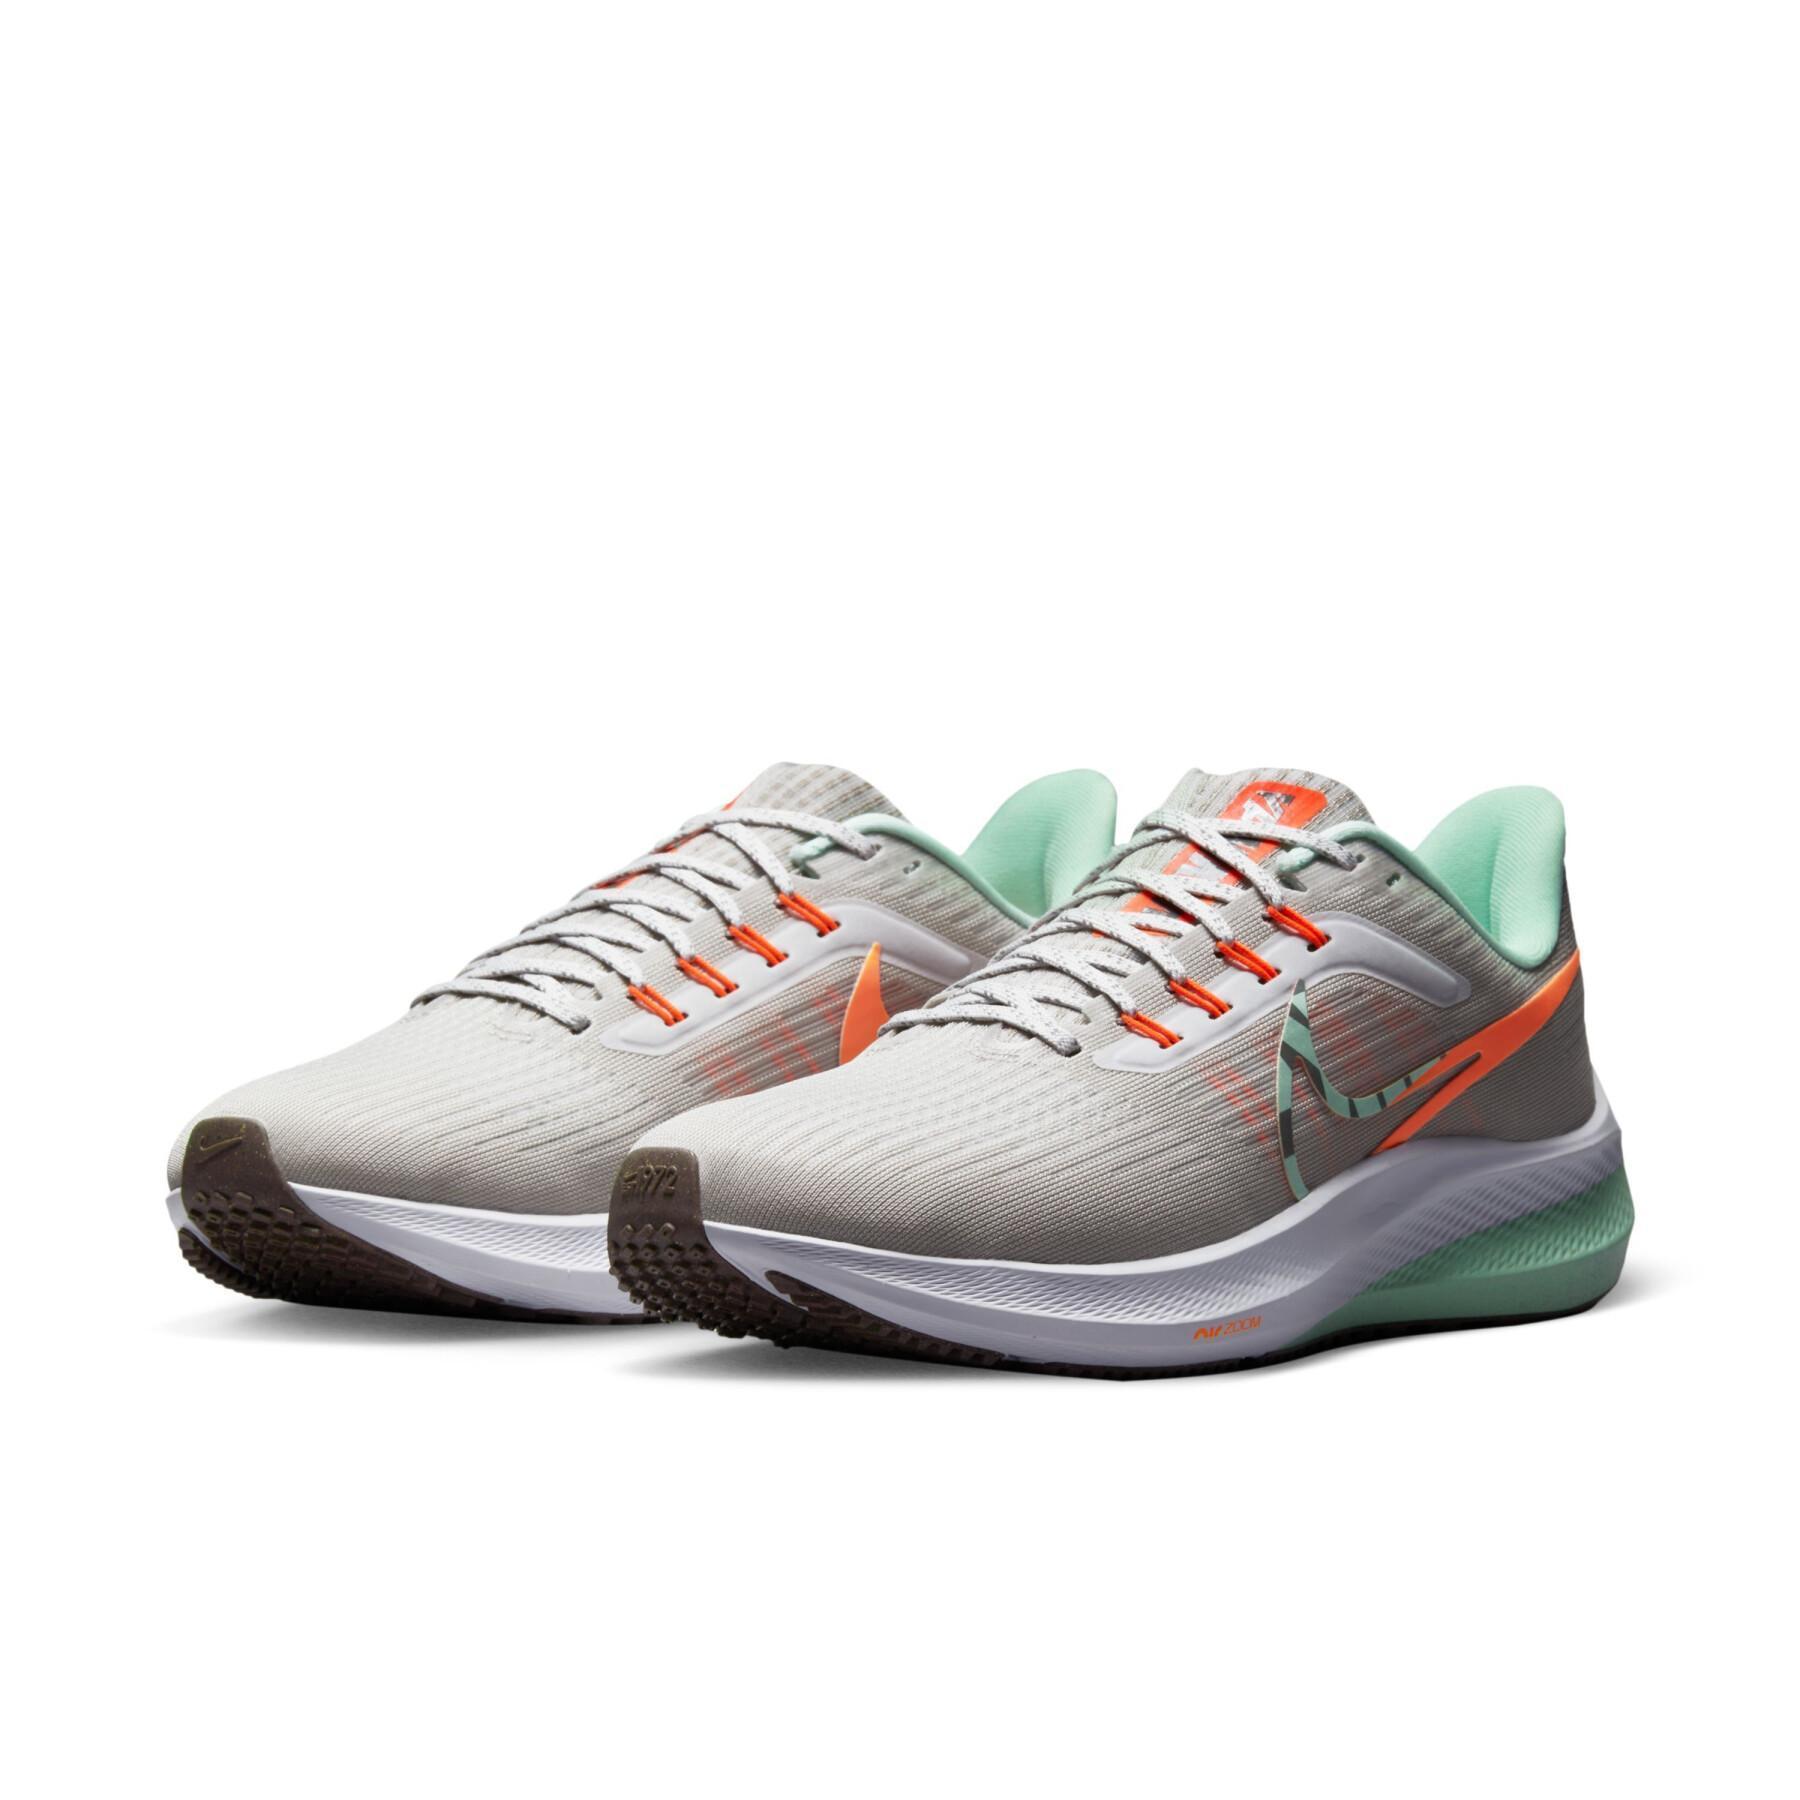 Buty do biegania dla kobiet Nike Air ZooPegasus 39 Premium